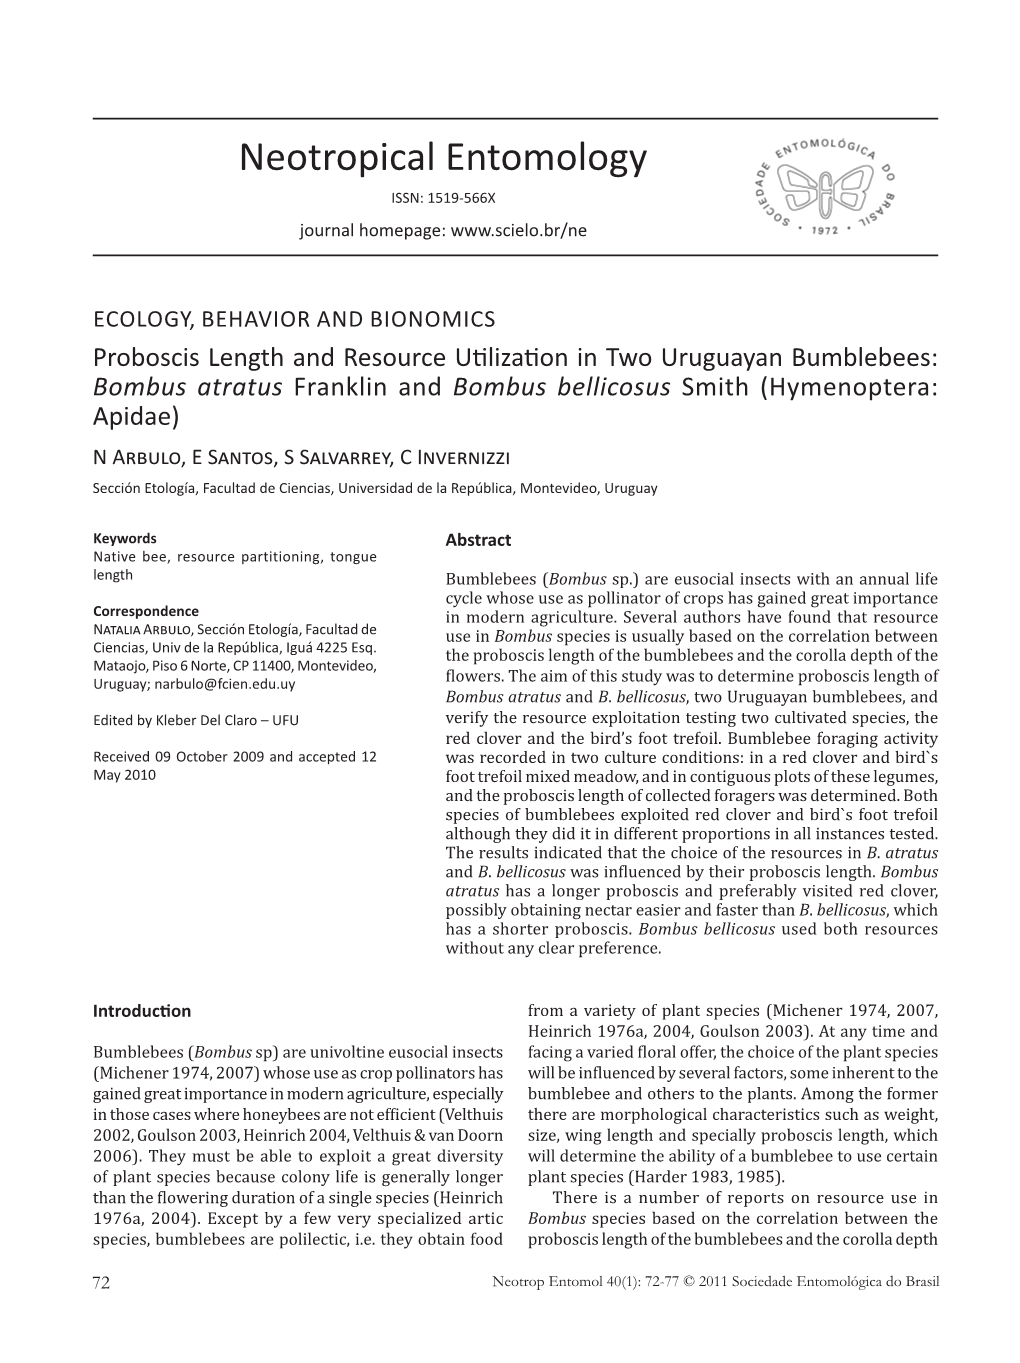 Proboscis Length and Resource Utilization in Two Uruguayan